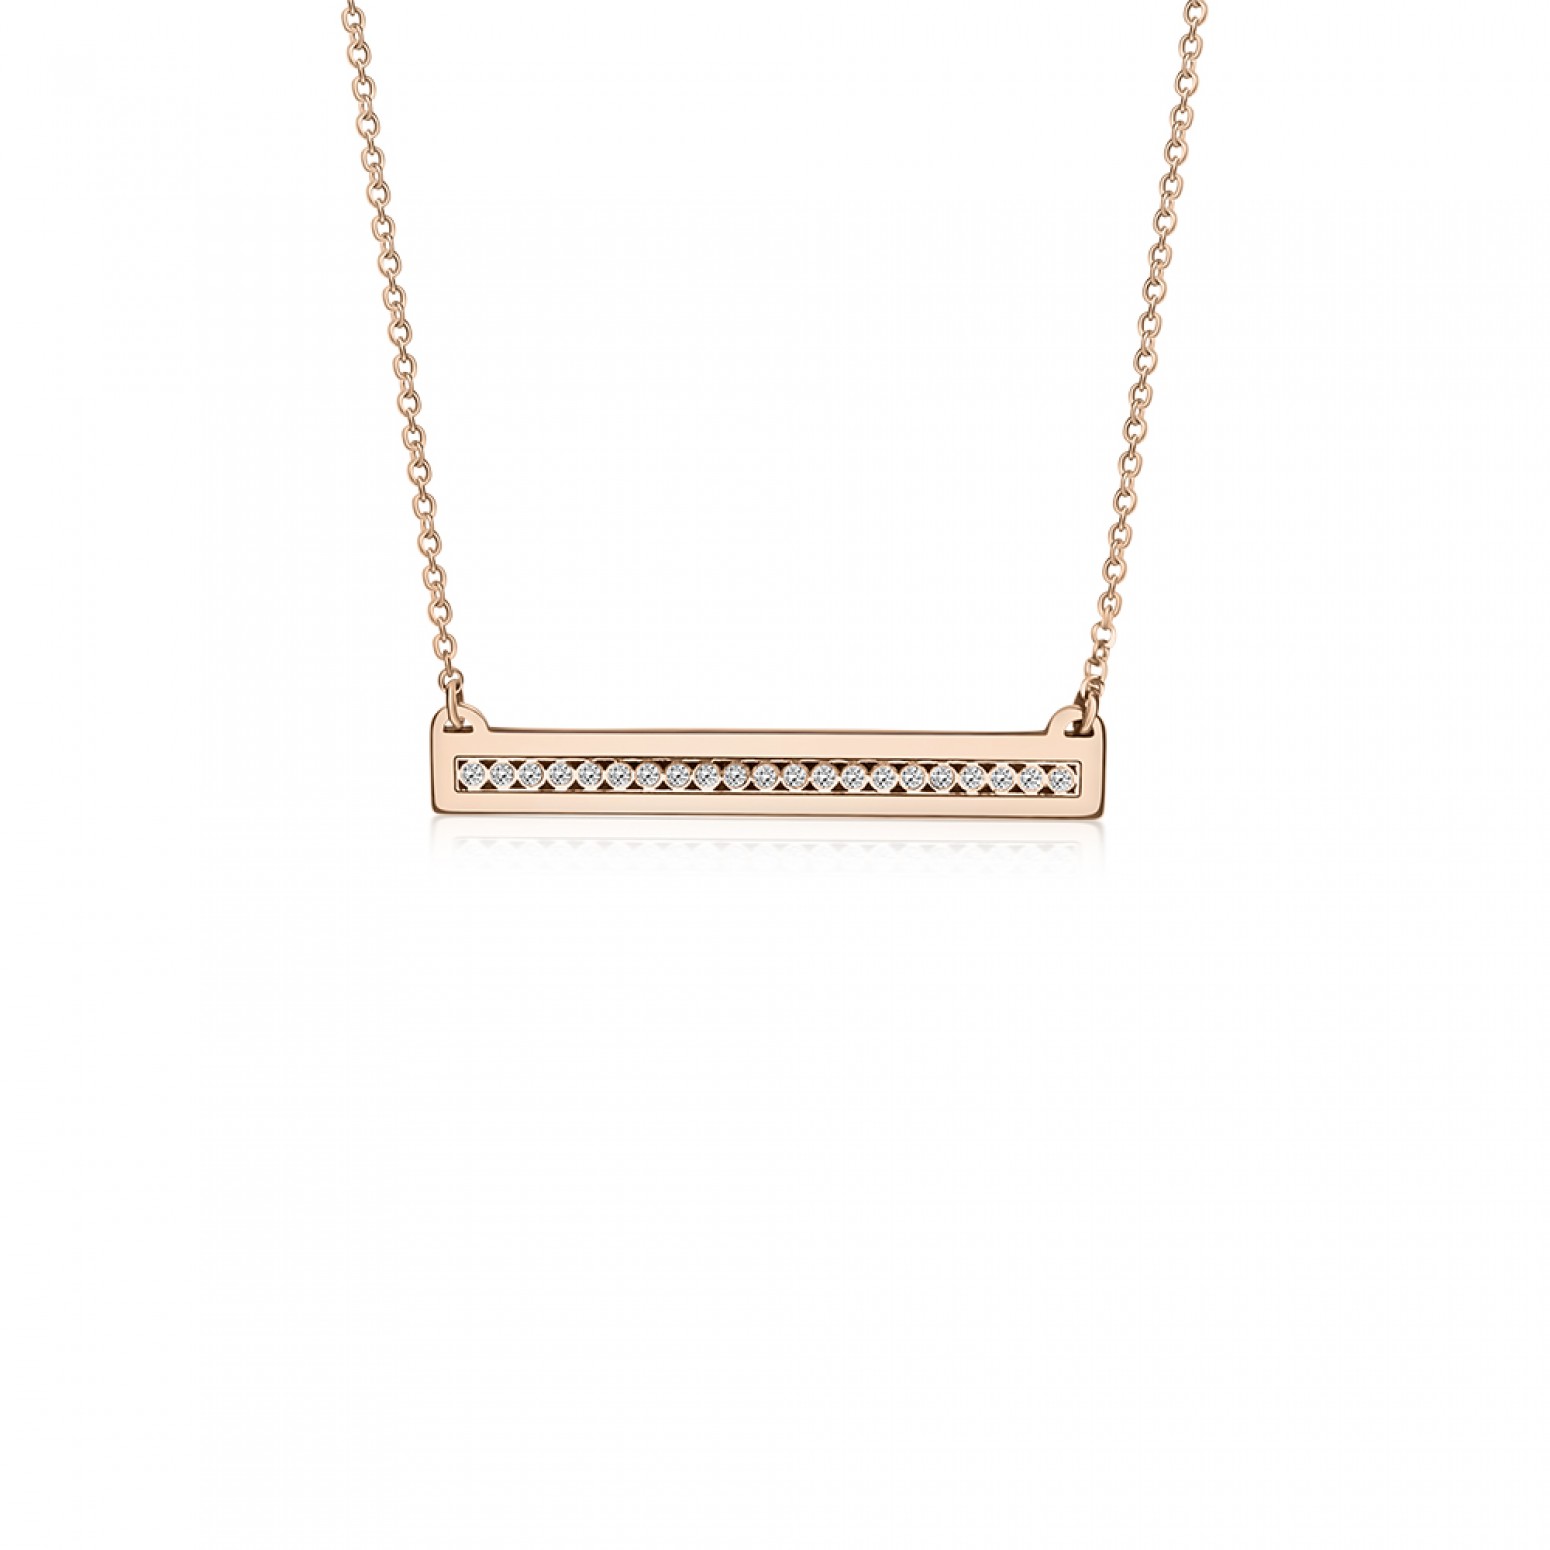 Bar necklace, Κ14 pink gold with diamonds 0.06ct, VS1, H ko4065 NECKLACES Κοσμηματα - chrilia.gr